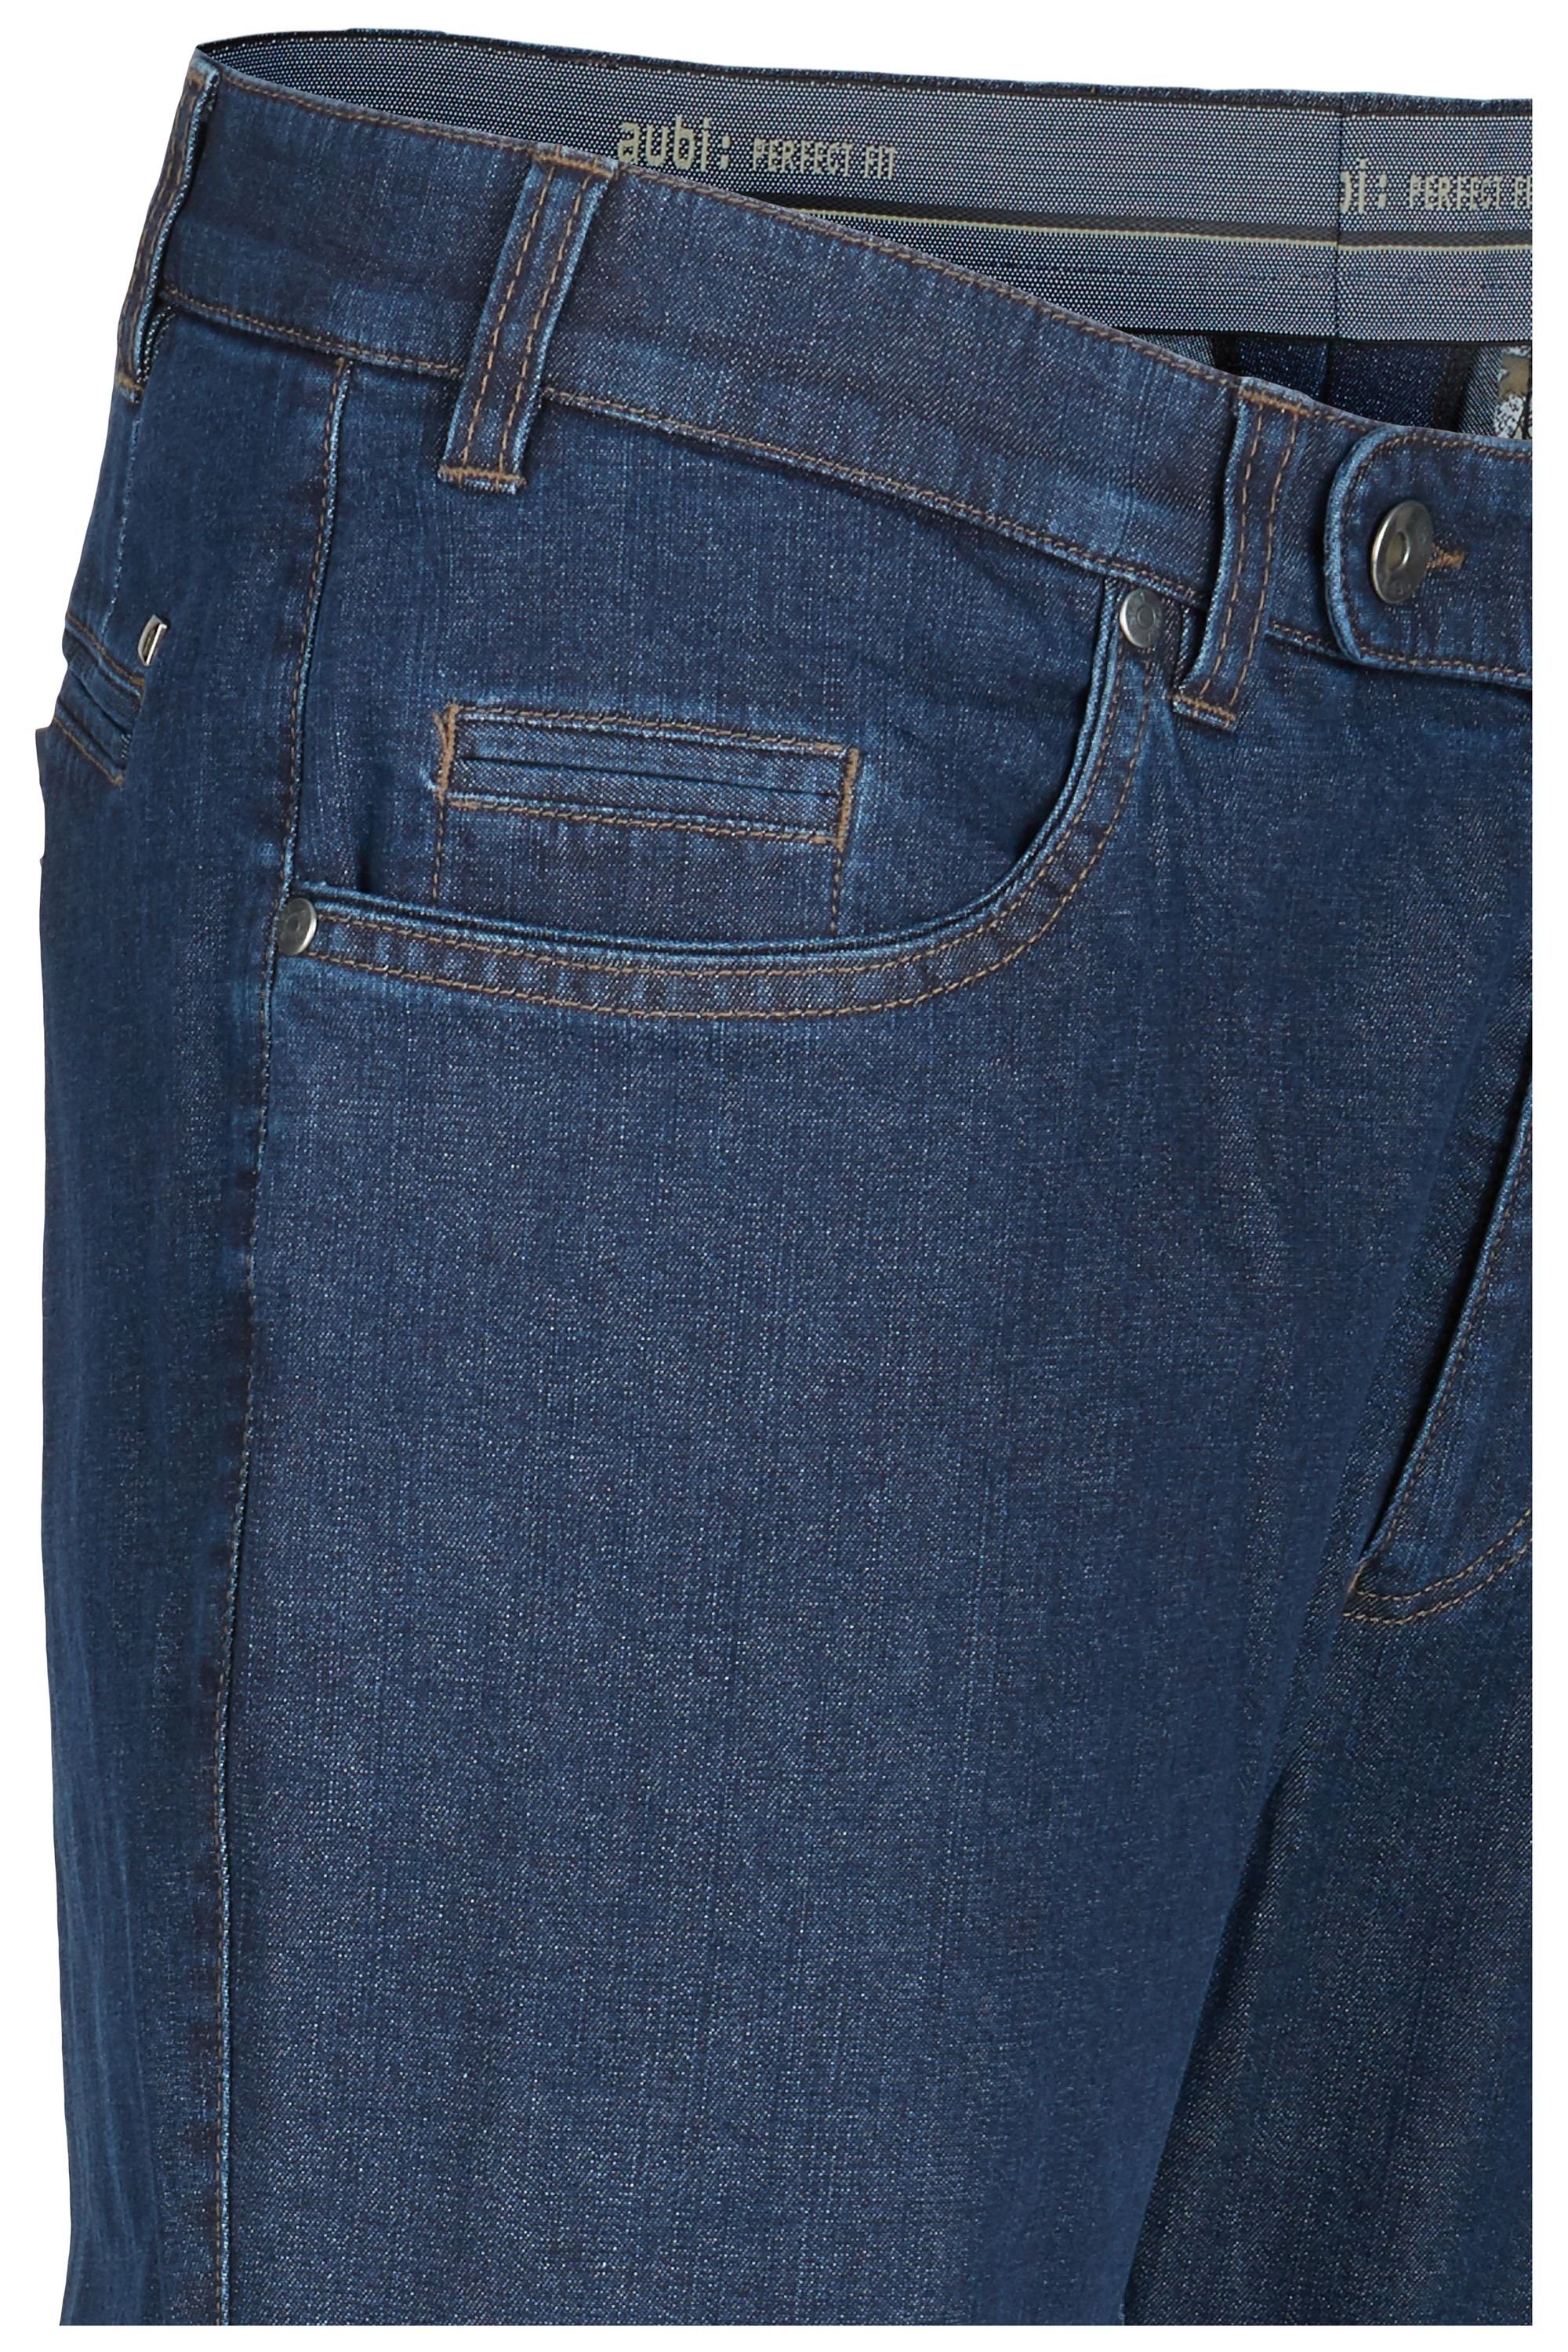 Bequeme Hose Stretch Modell Jeans Herren Fit stone Jeans aubi (46) Perfect 577 aubi: